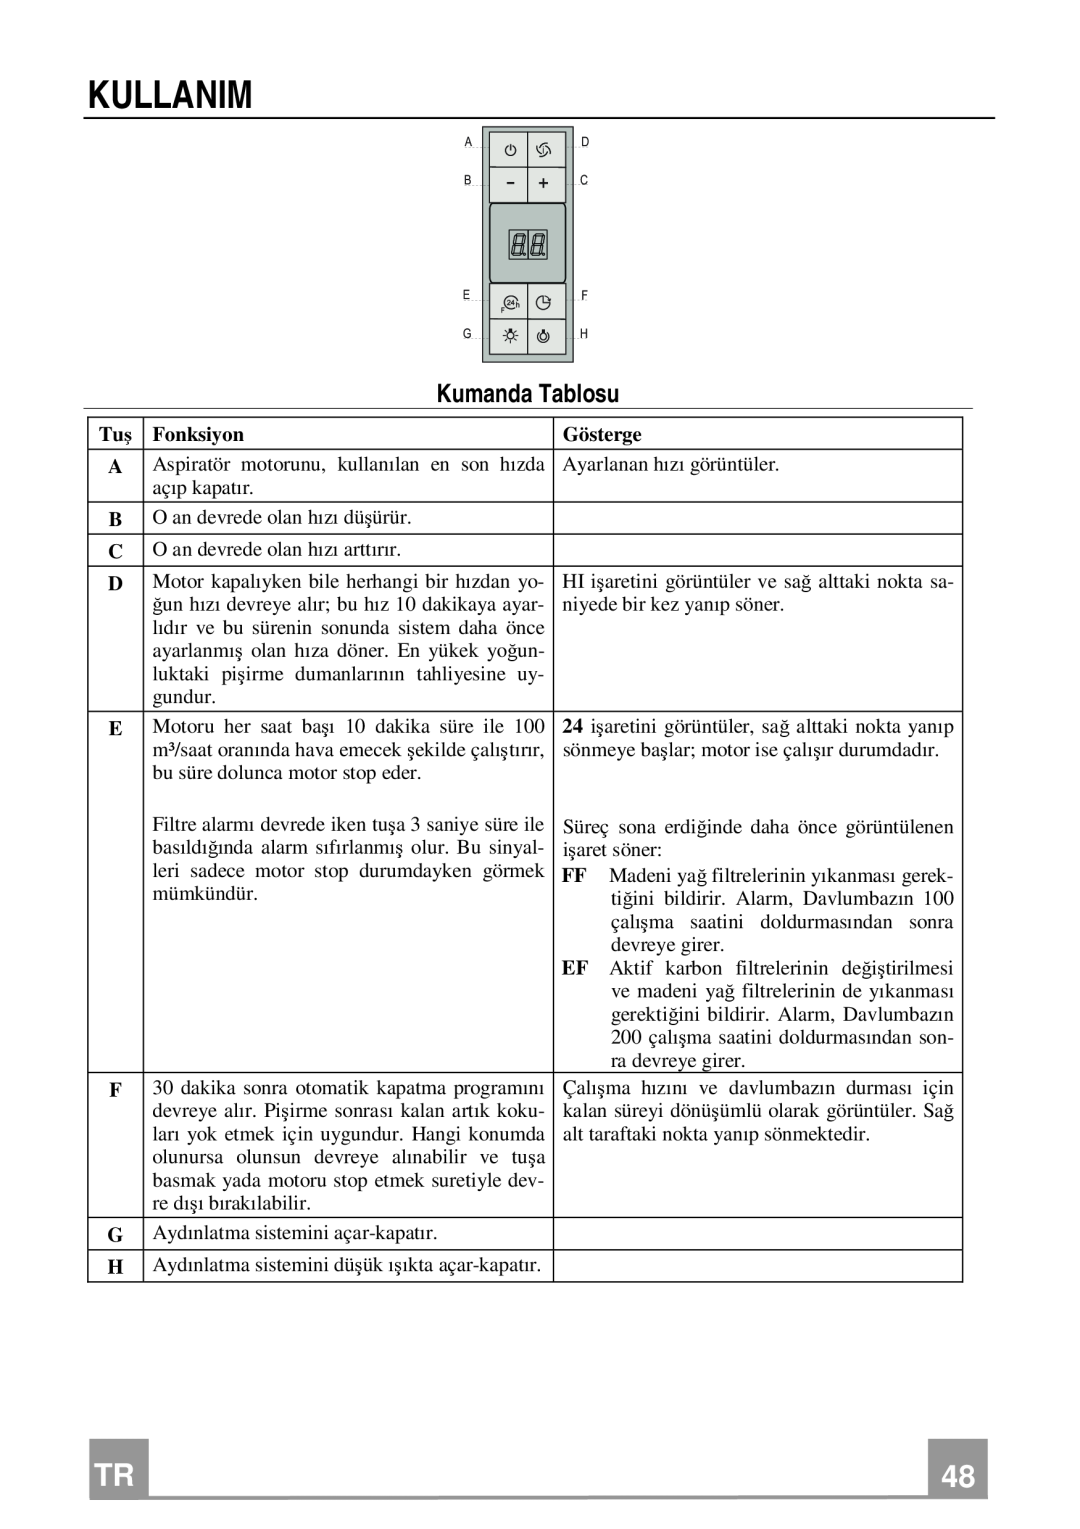 Franke Consumer Products FQD 907 manual Kullanim, Kumanda Tablosu, Fonksiyon, Gösterge 